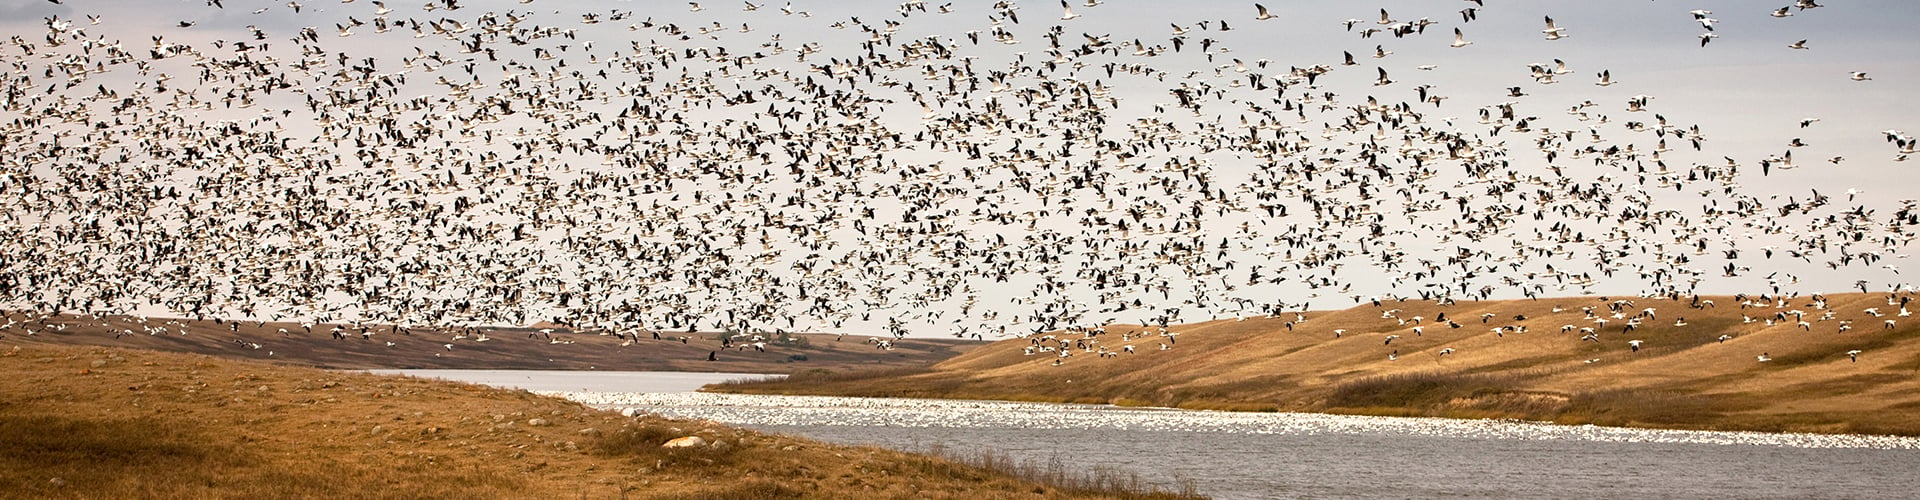 flock of birds over Saskatchewan prairie